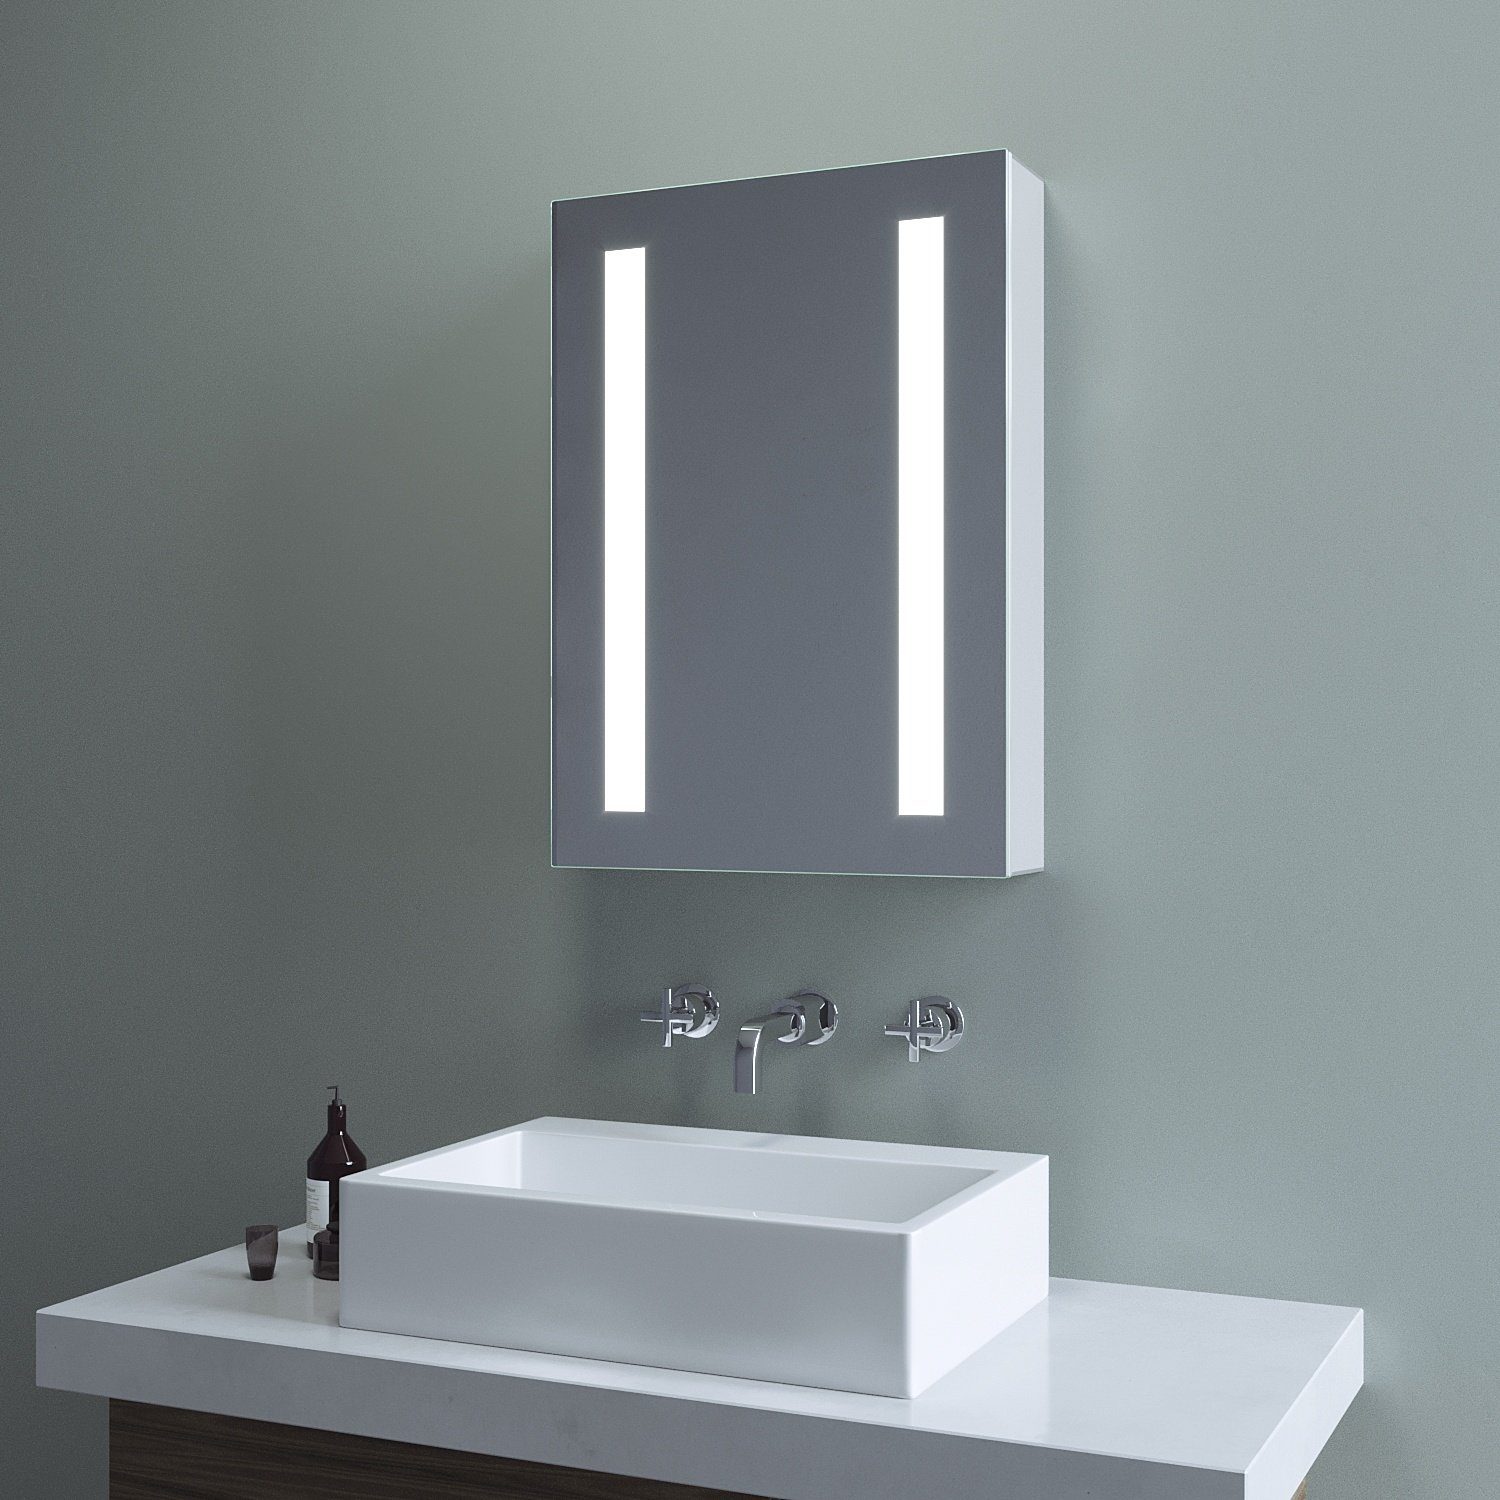 aqua batos Spiegelschrank »Spiegelschrank Bad mit Beleuchtung  Badezimmerschrank Badspiegel« 2 Glaseinlegeböden, Beschlagfrei, IR-Sensor,  Dimmbar, Memory-Funktion, IP44